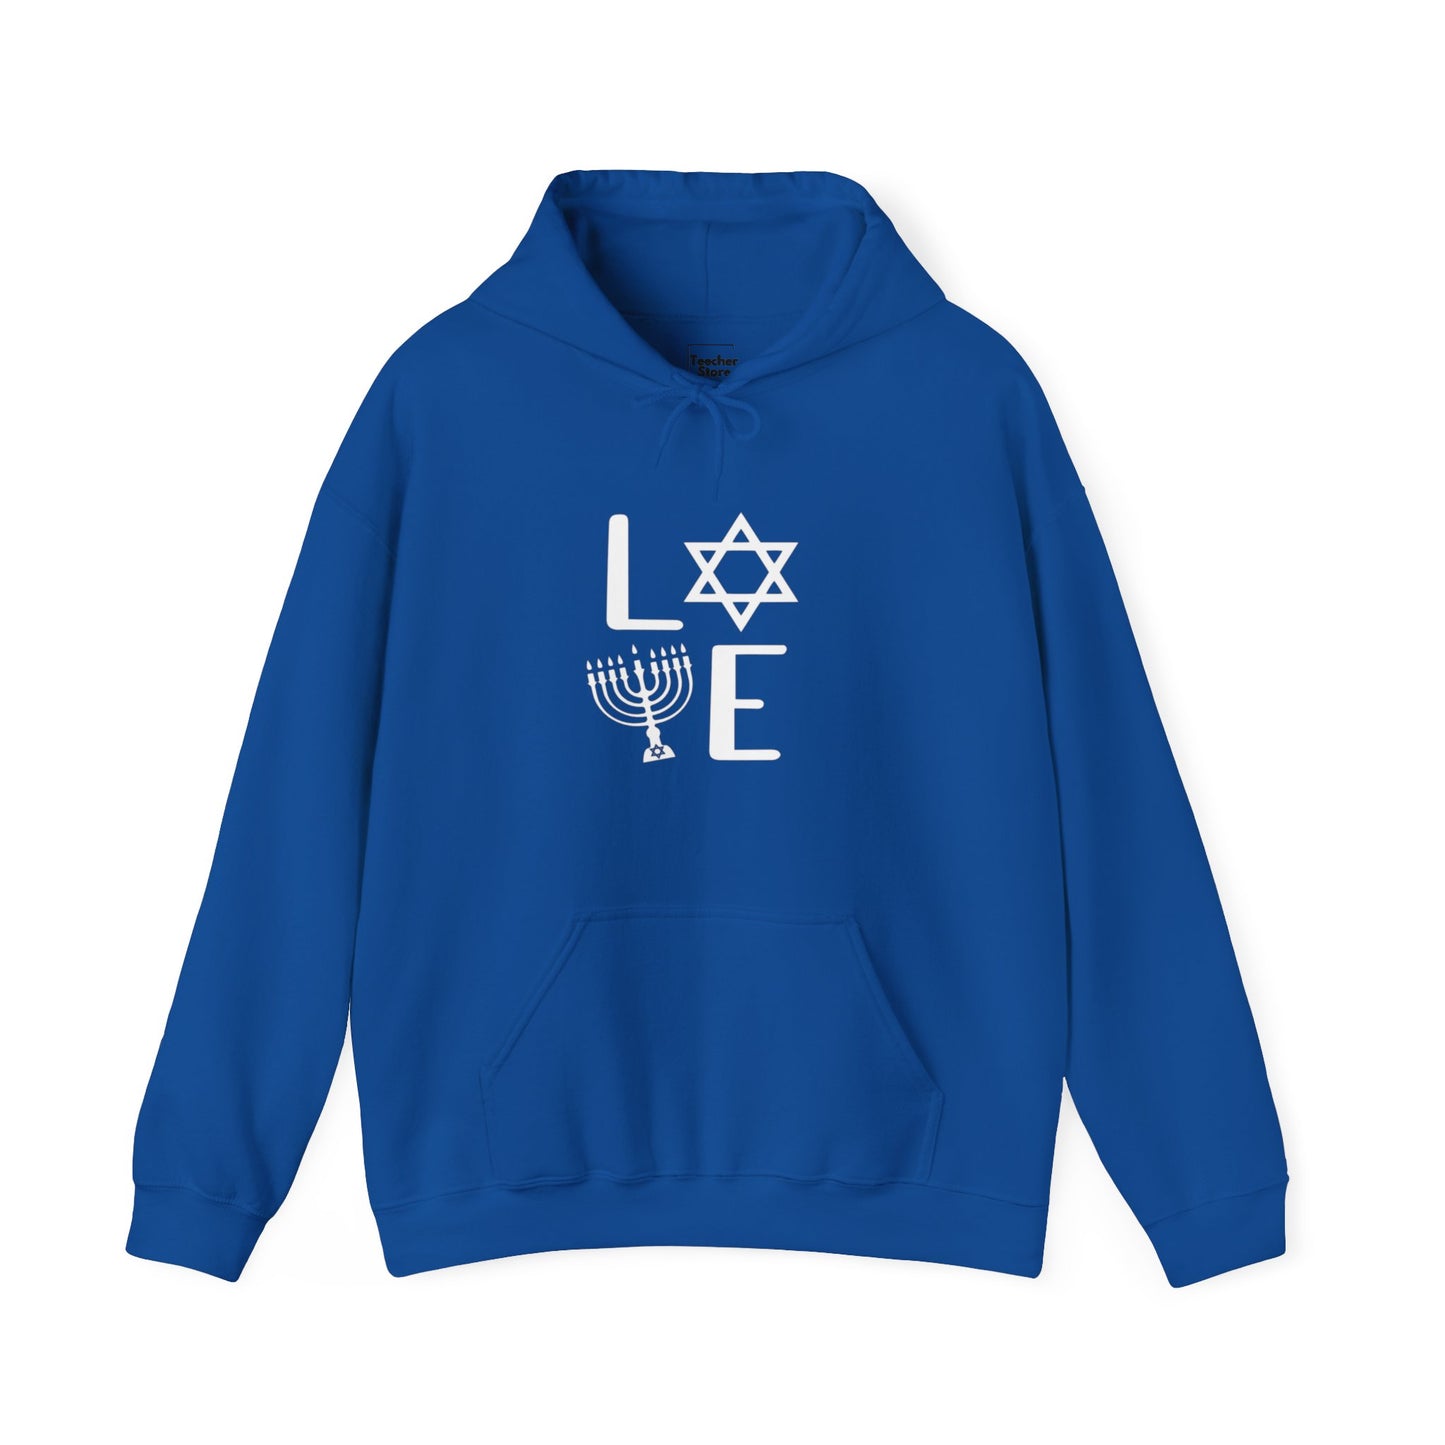 Love Hanukkah Hooded Sweatshirt